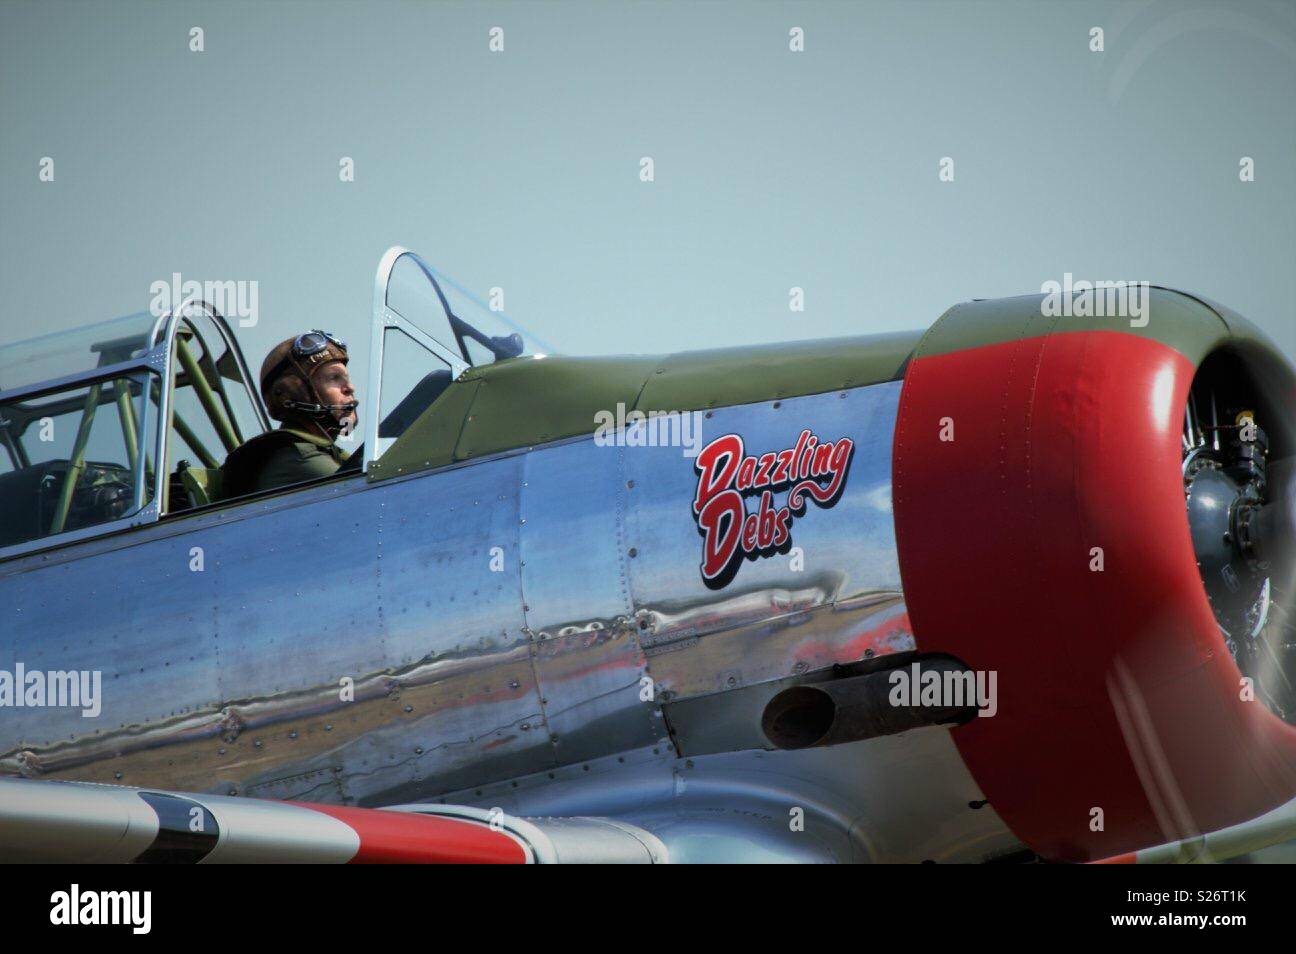 Pilot in dazzling debs plane Duxford Stock Photo